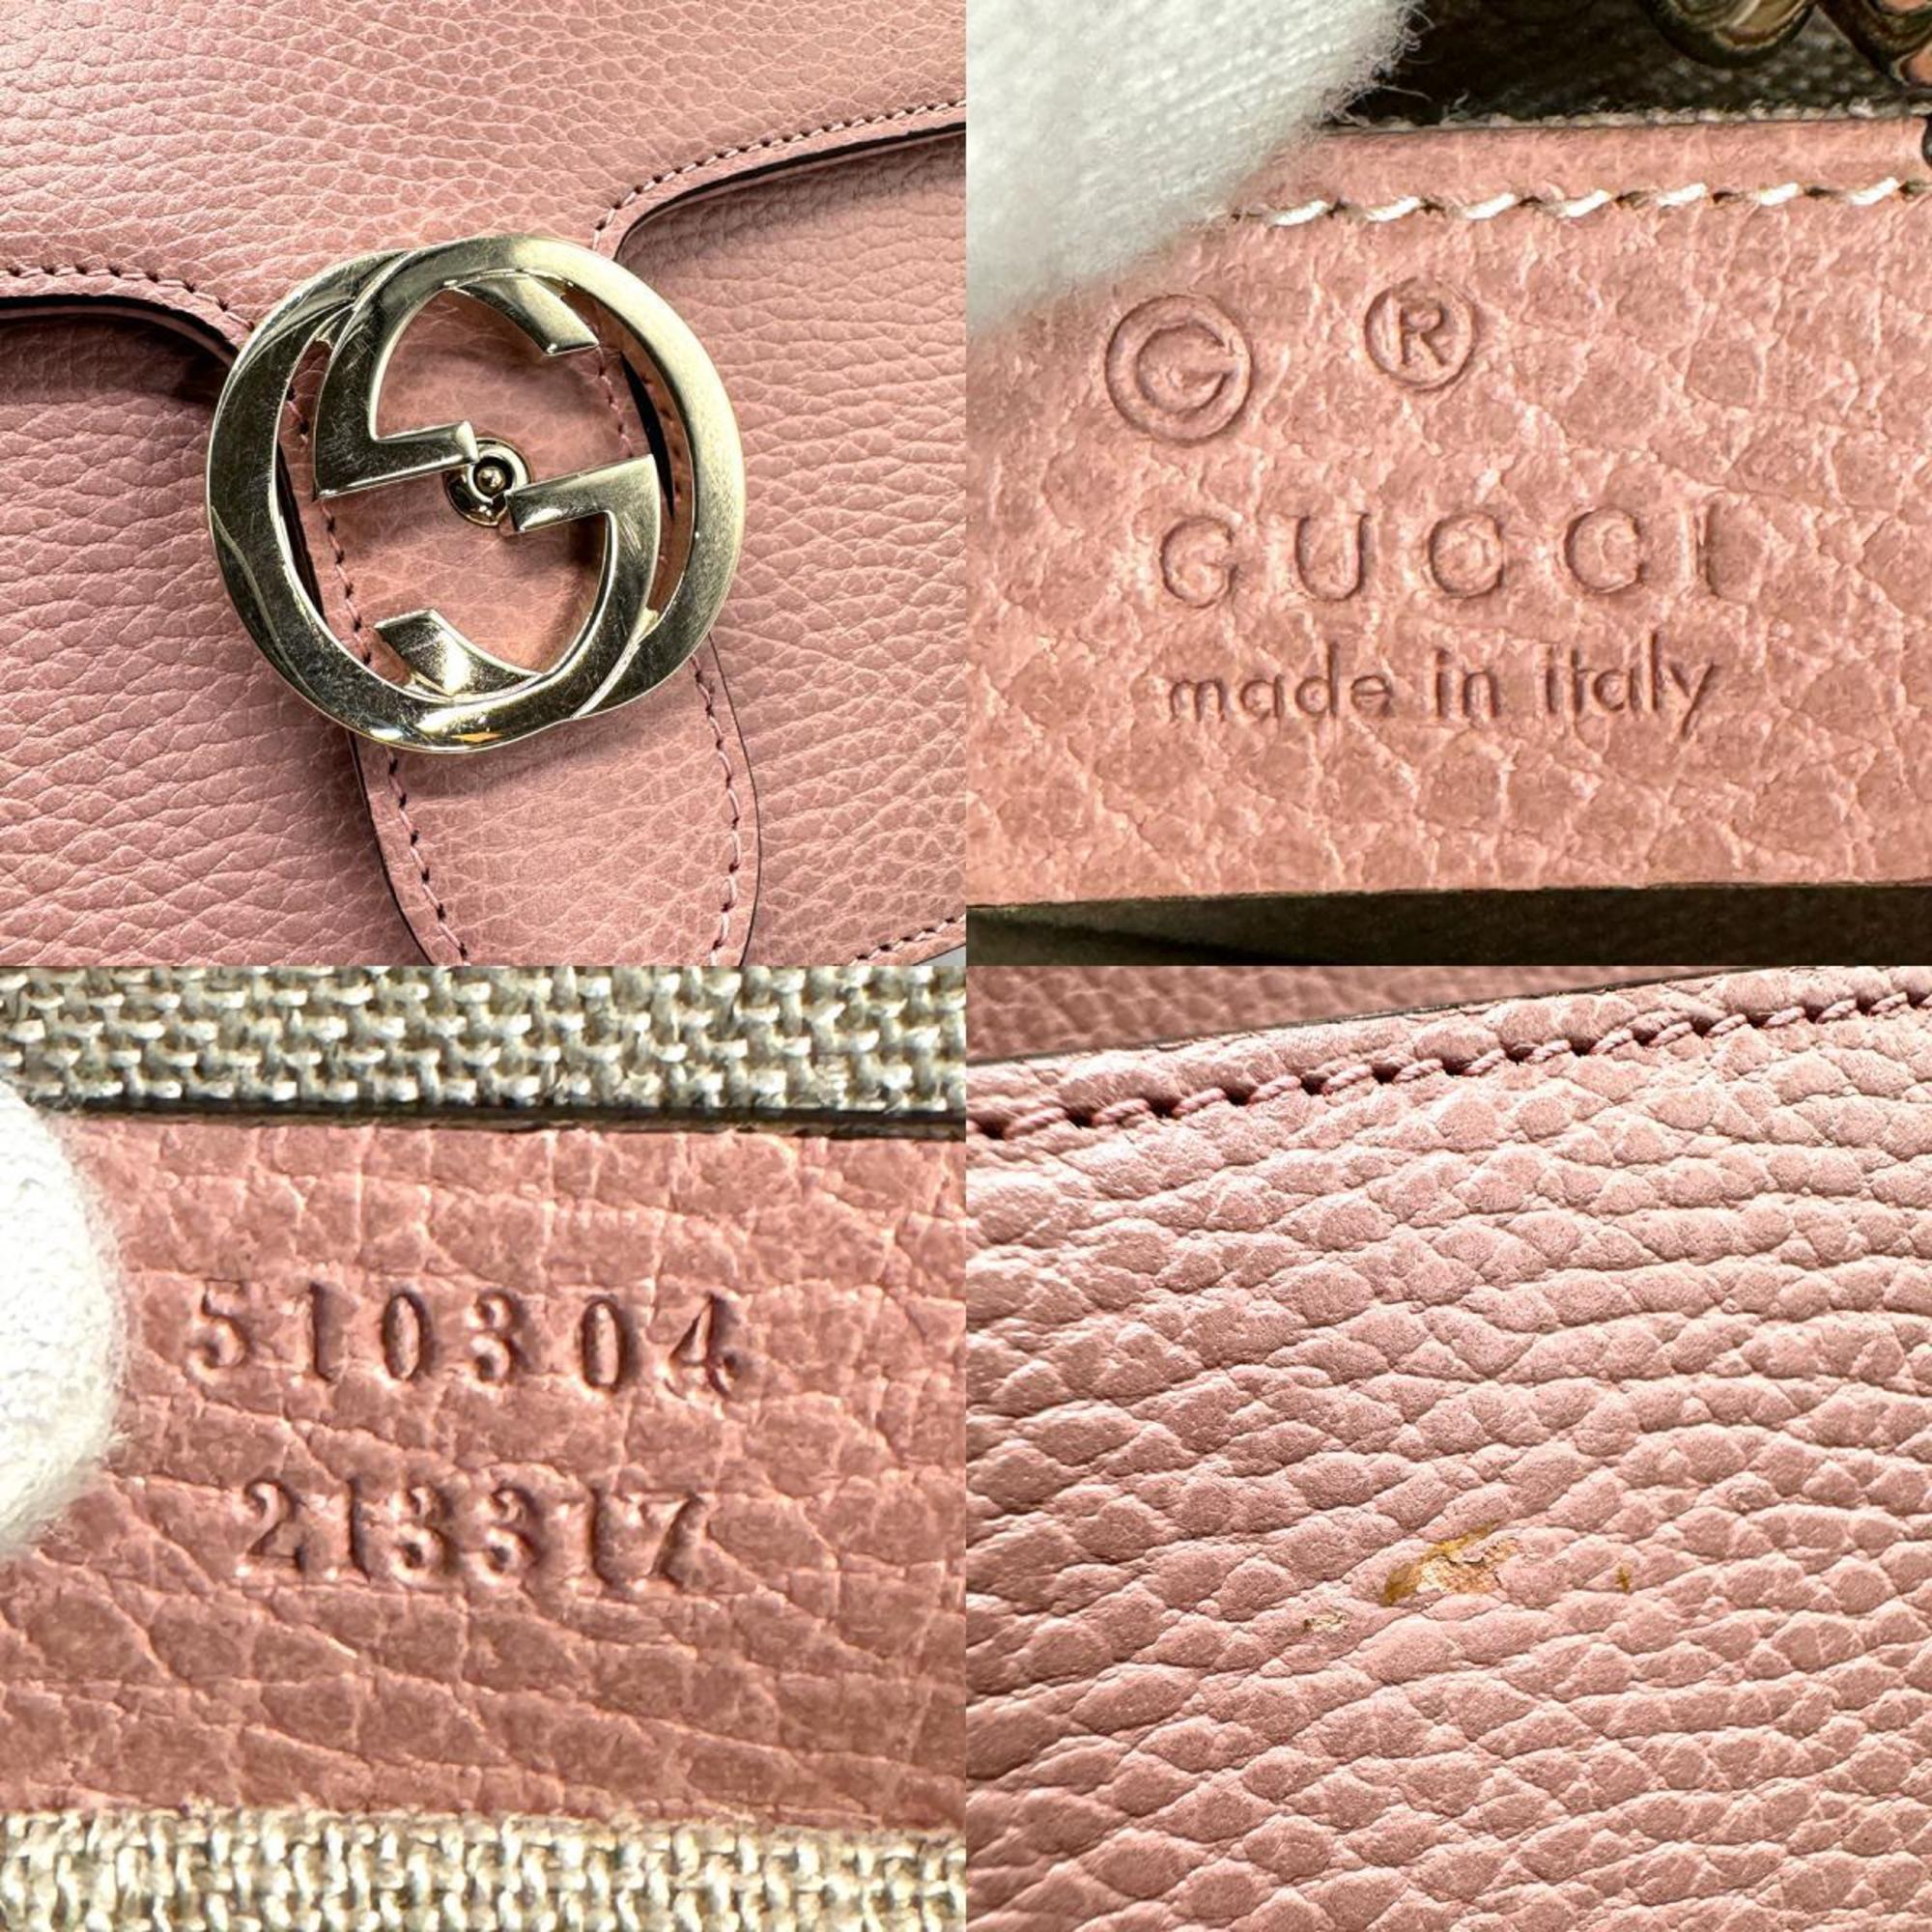 GUCCI Shoulder Bag Interlocking G Leather Pink Women's 510304 z1054